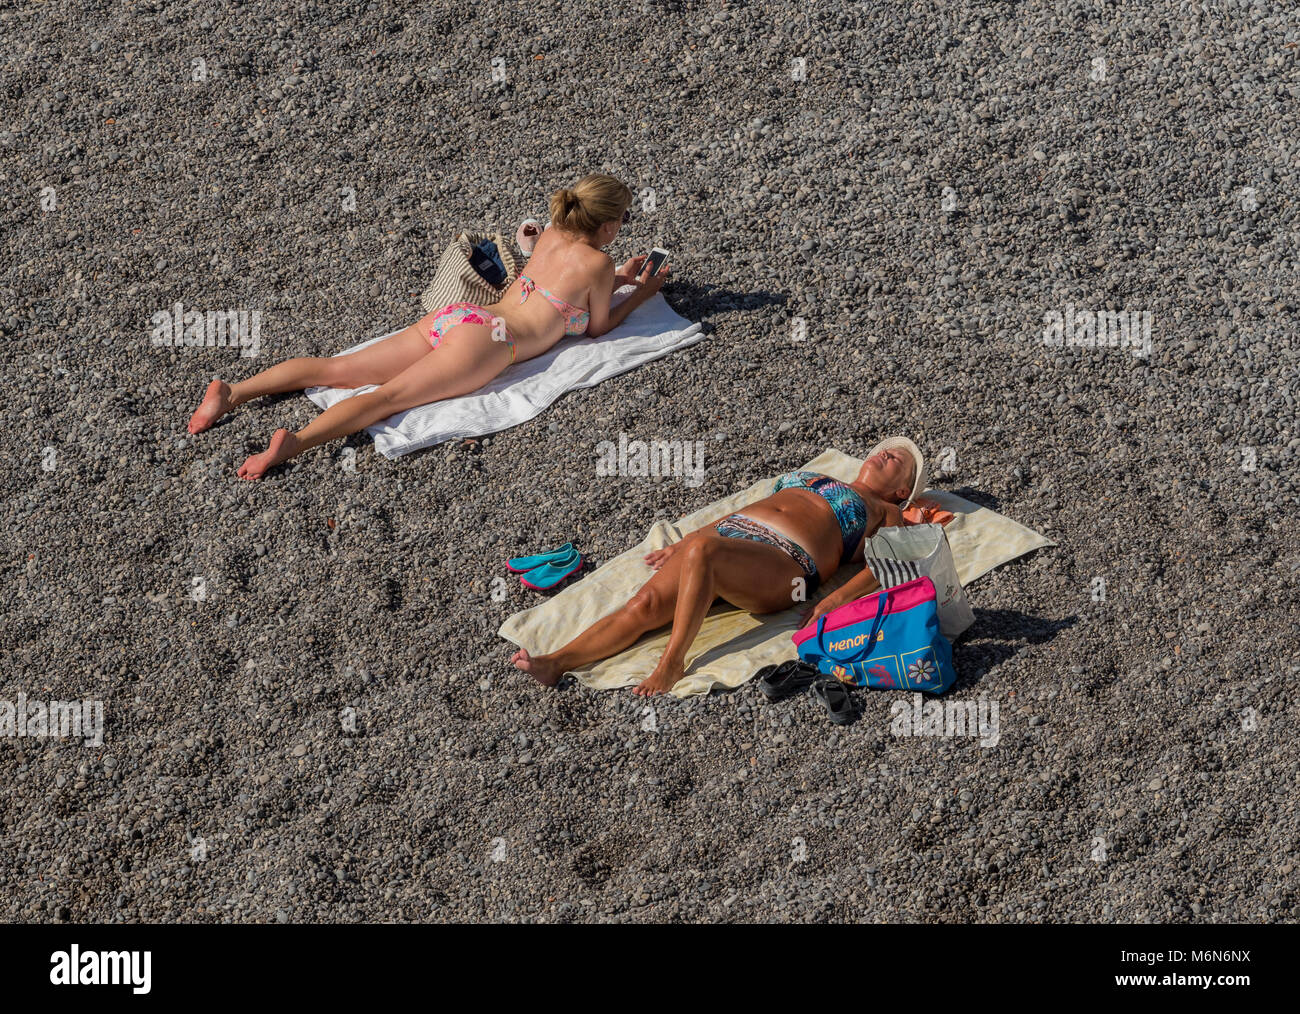 voyeur beach girls sunbathing Adult Pics Hq